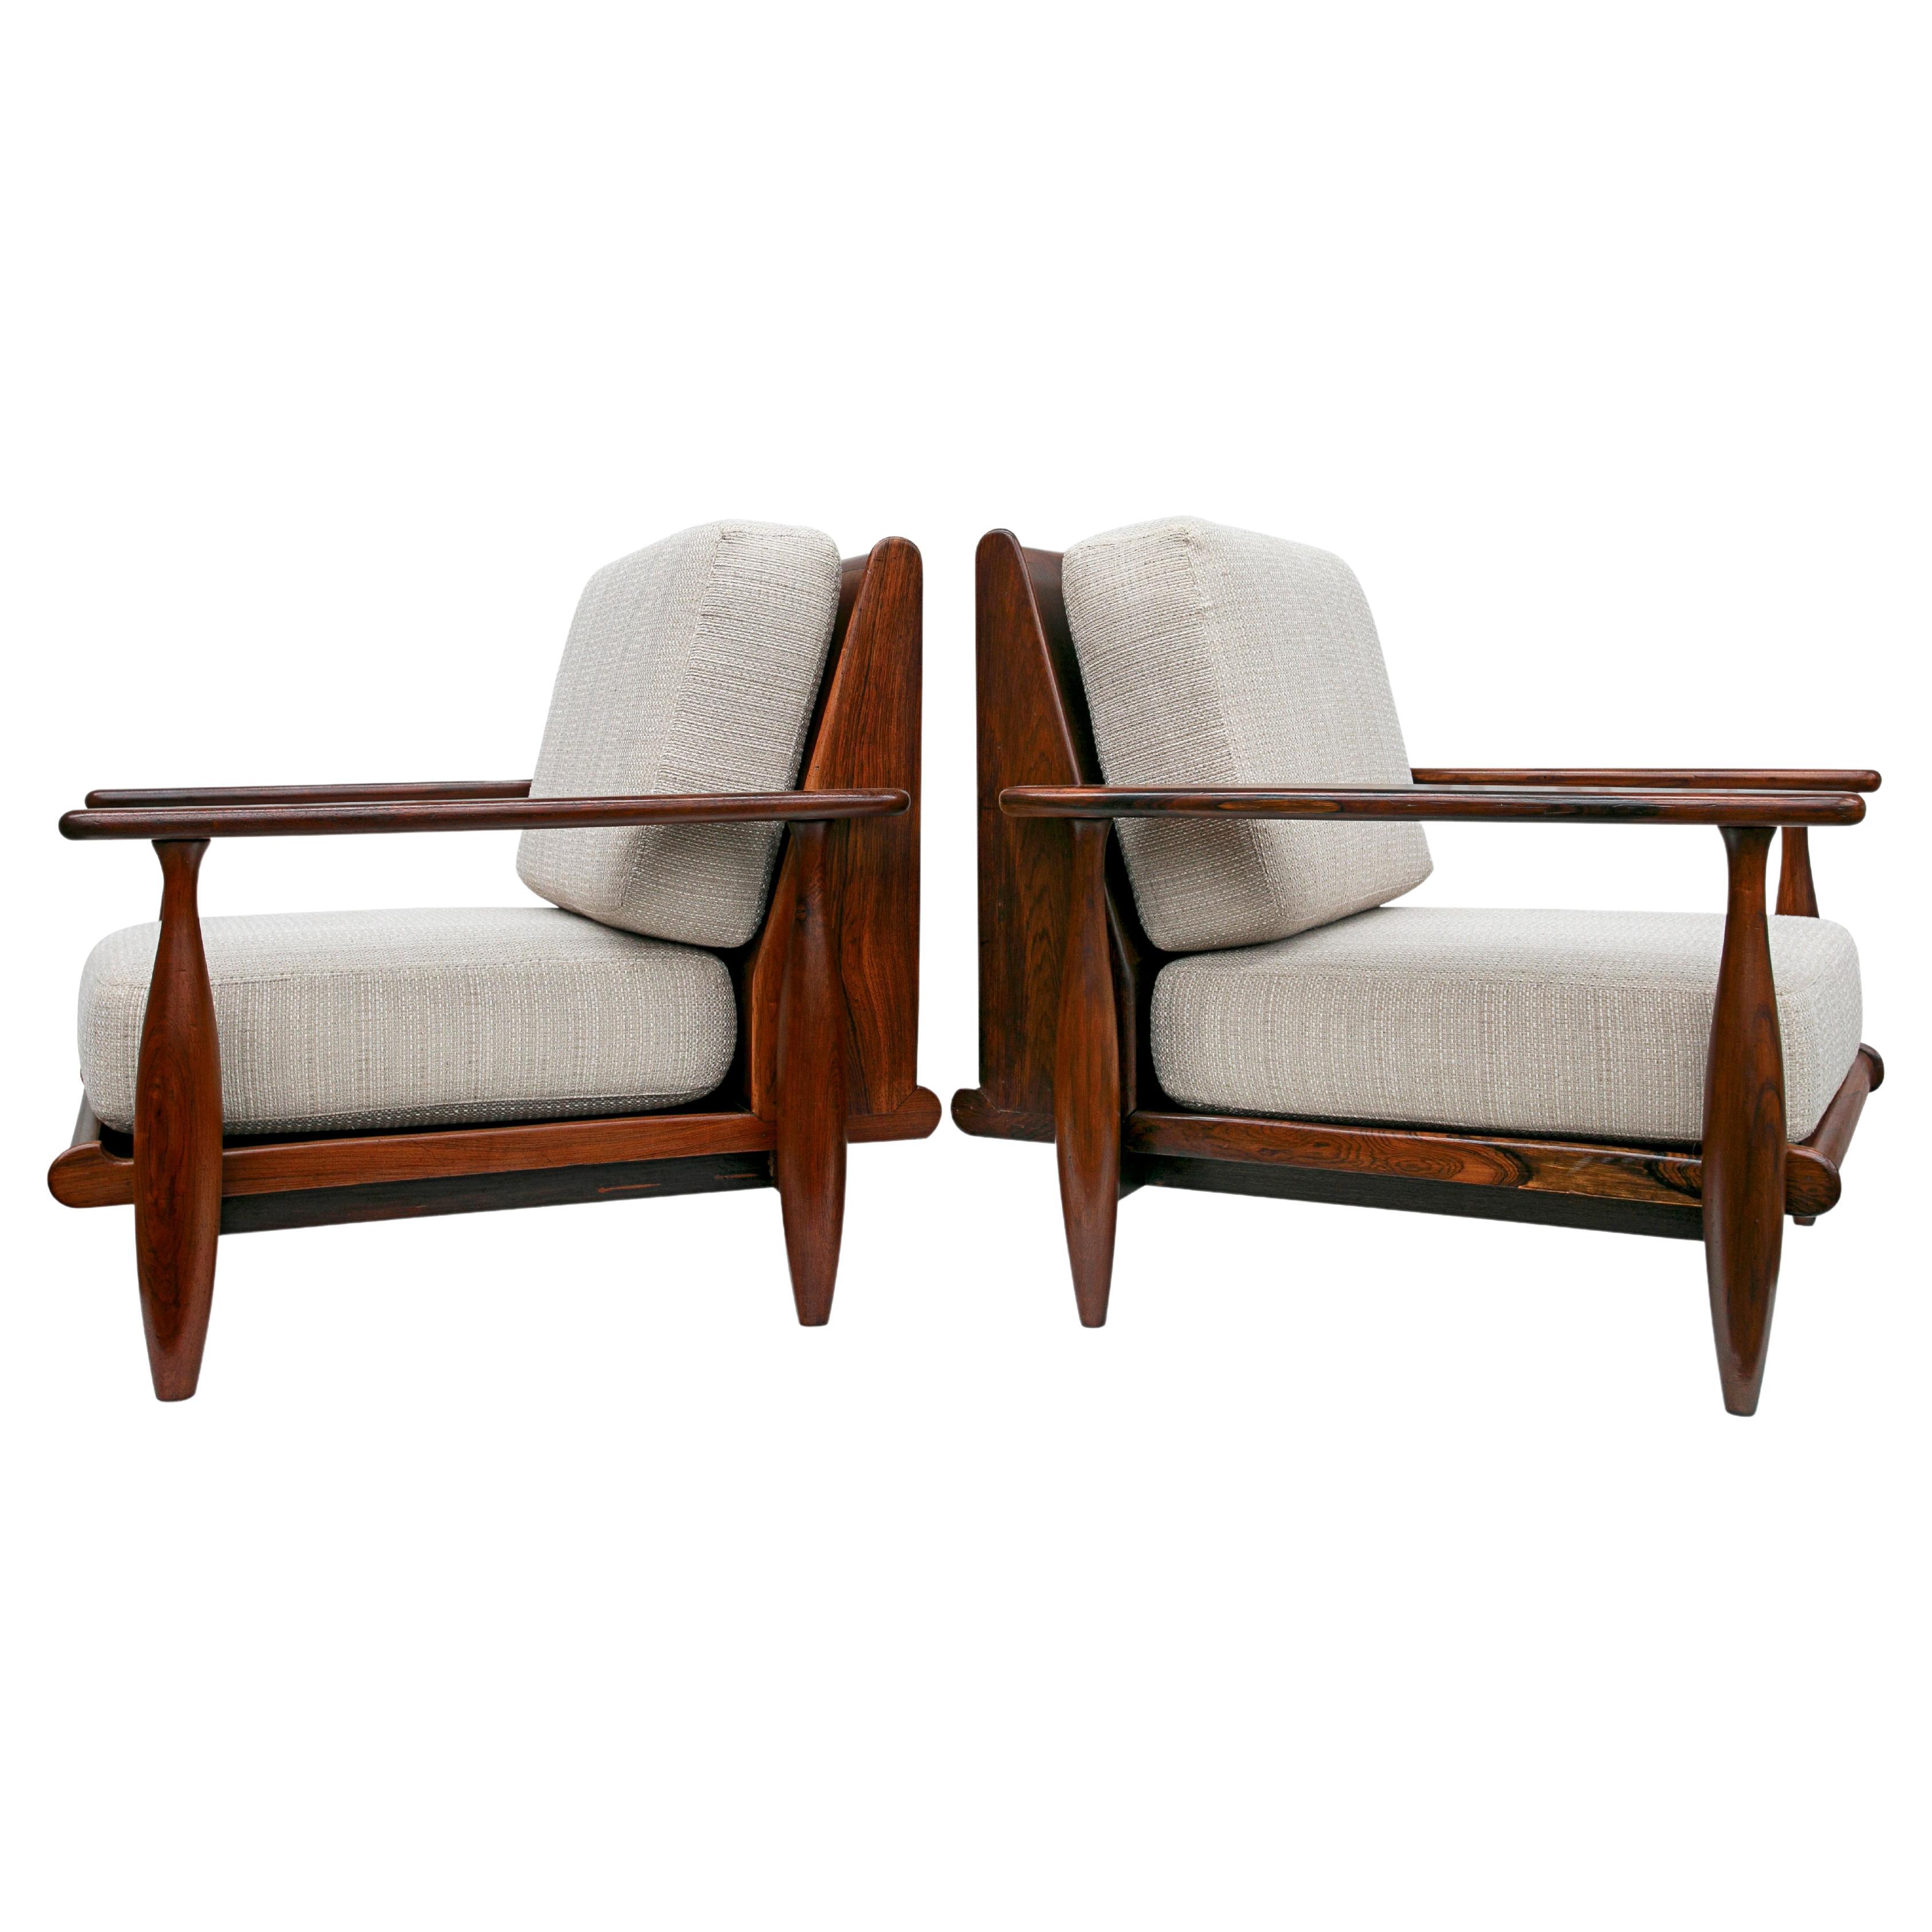 Mid-Century Modern Brazilian Modern Armchairs in Hardwood & Beige Linen by Liceu De Artes, 1960s For Sale